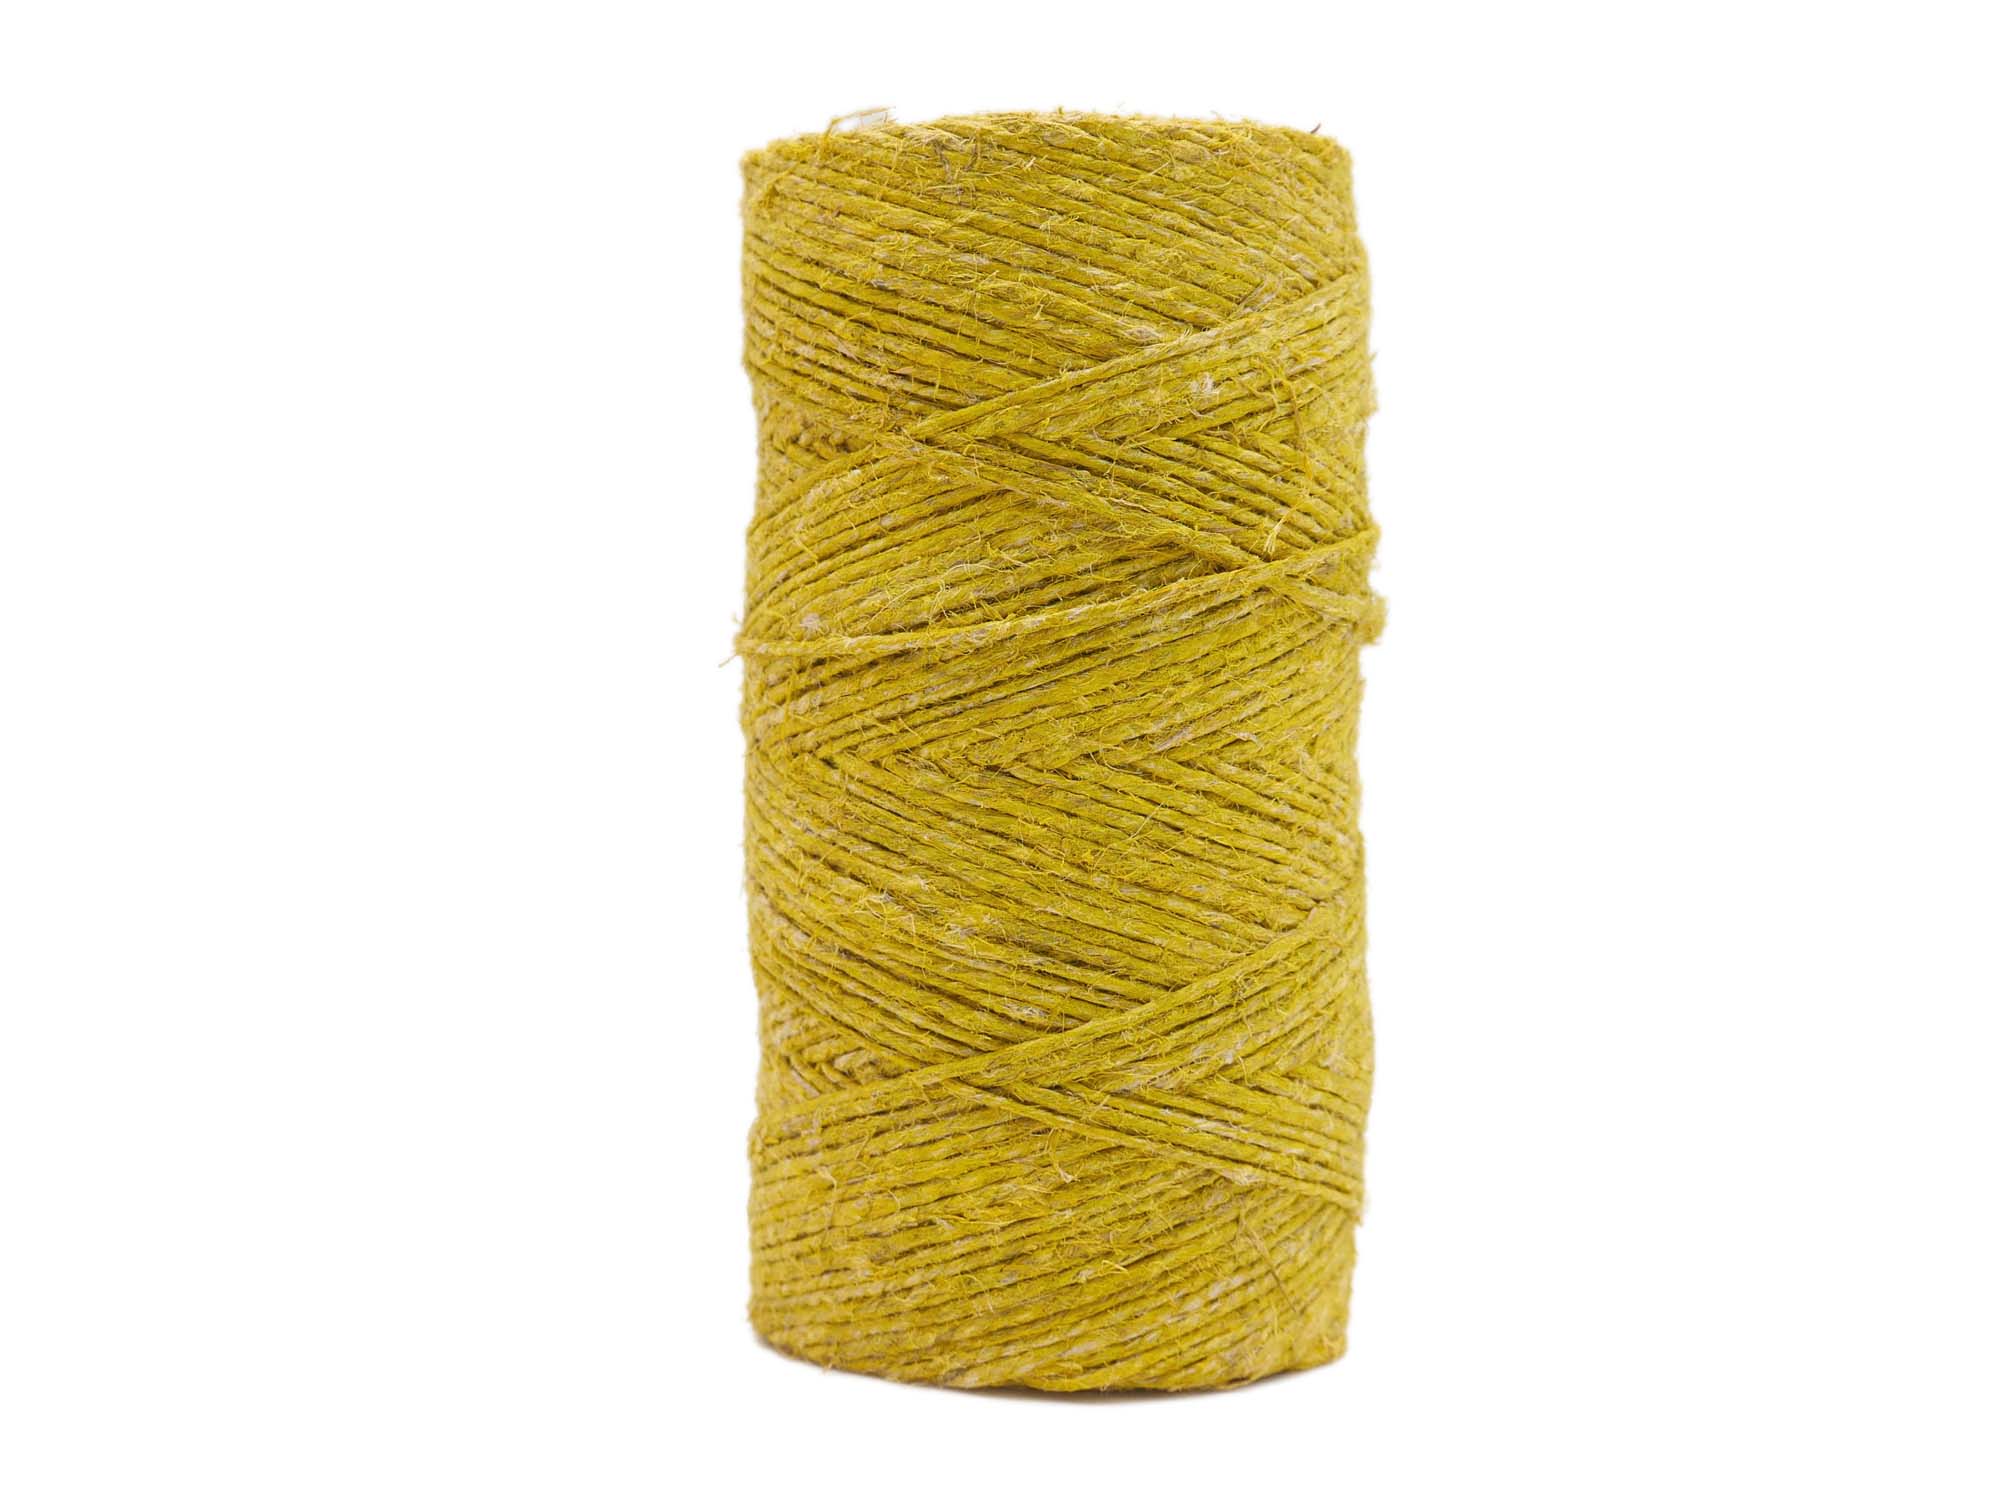 Antiqued Hemp Cord: 4-ounce Roll: Yellow 